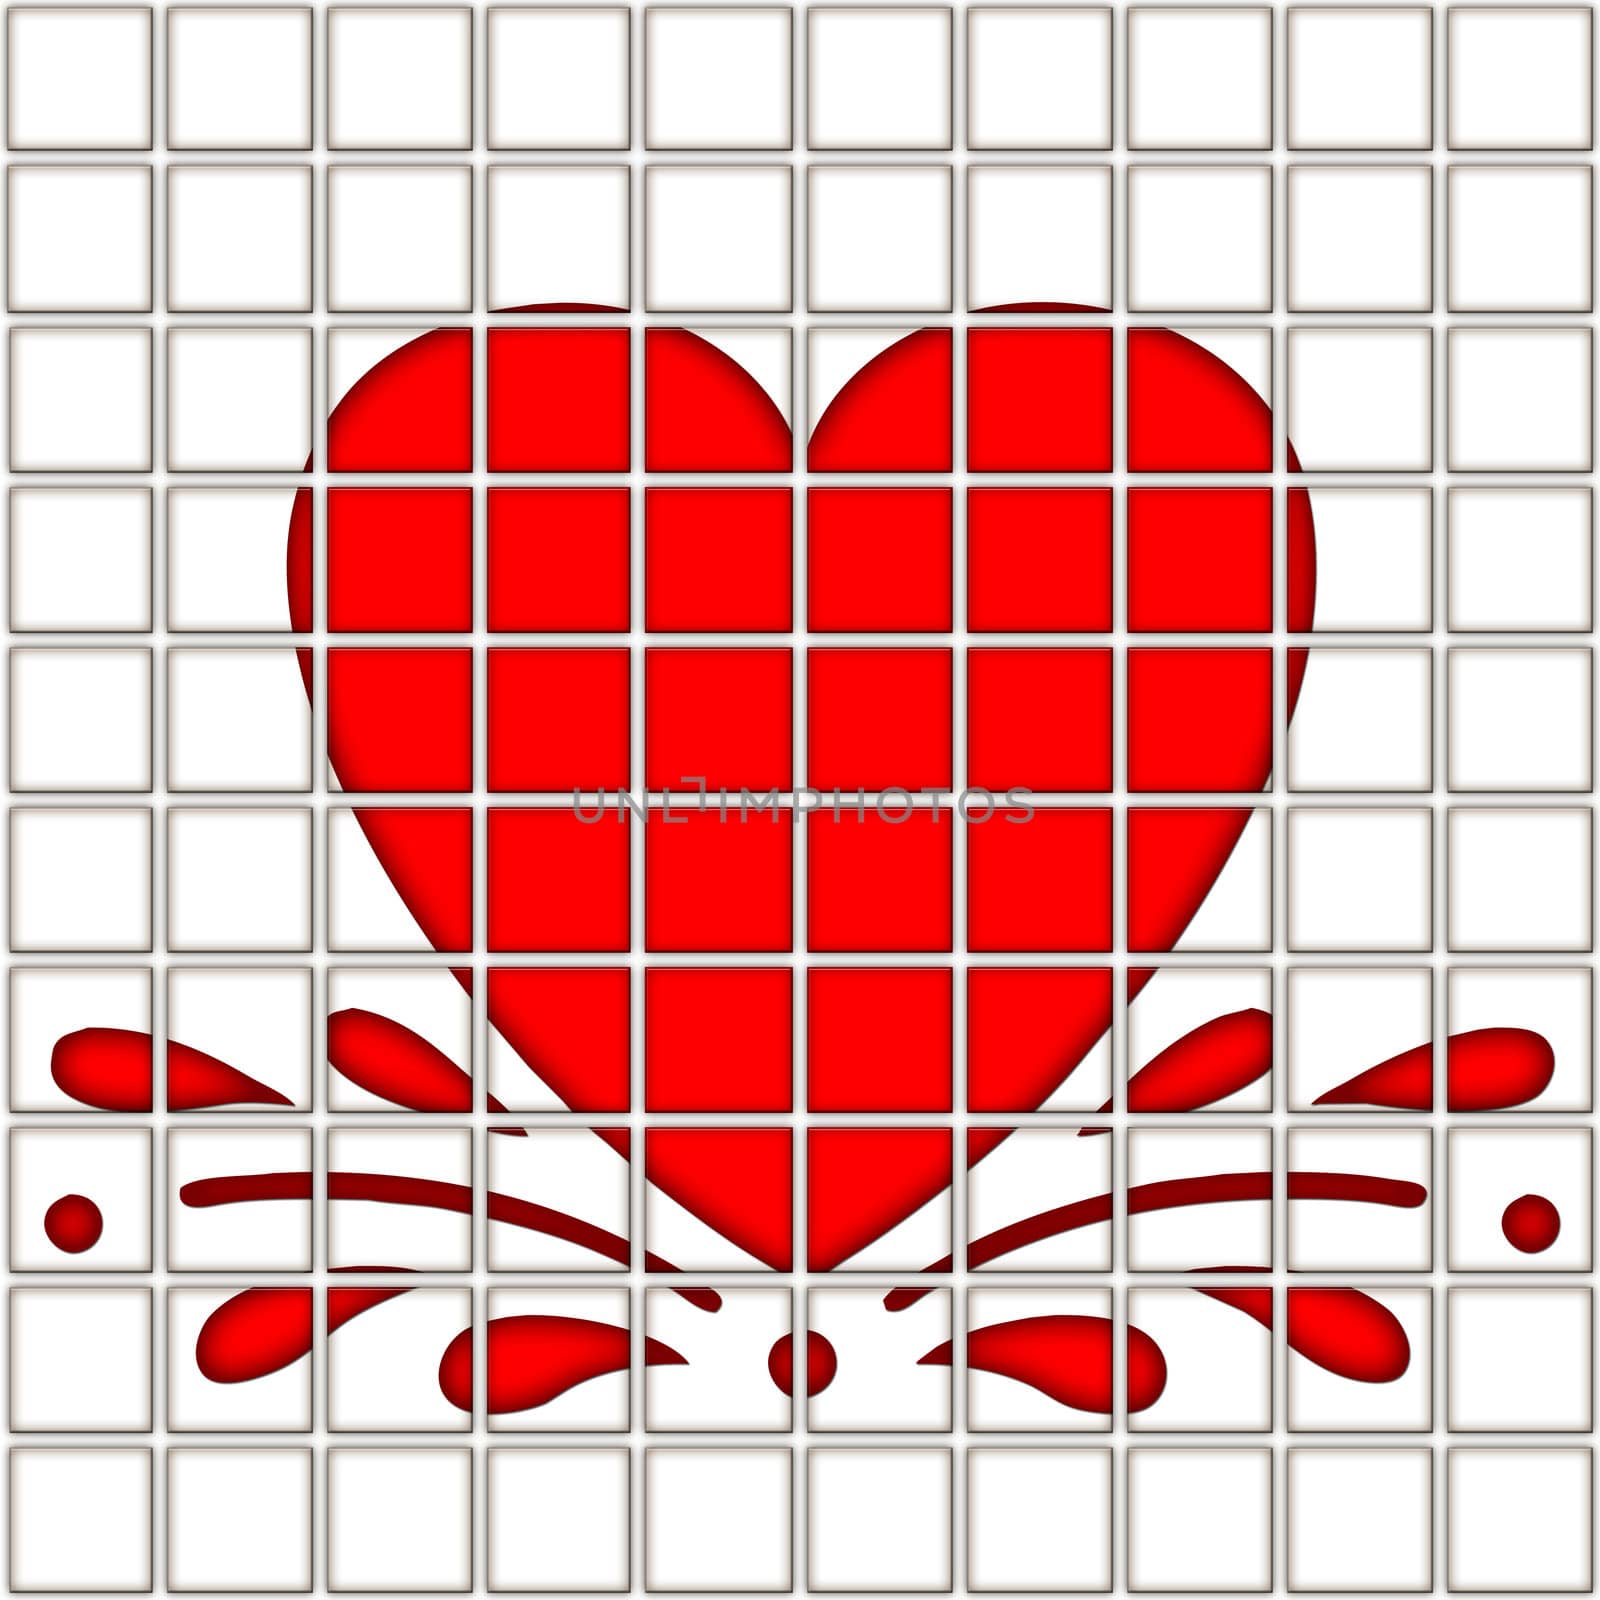 splashing red heart on 10 by 10 tiles